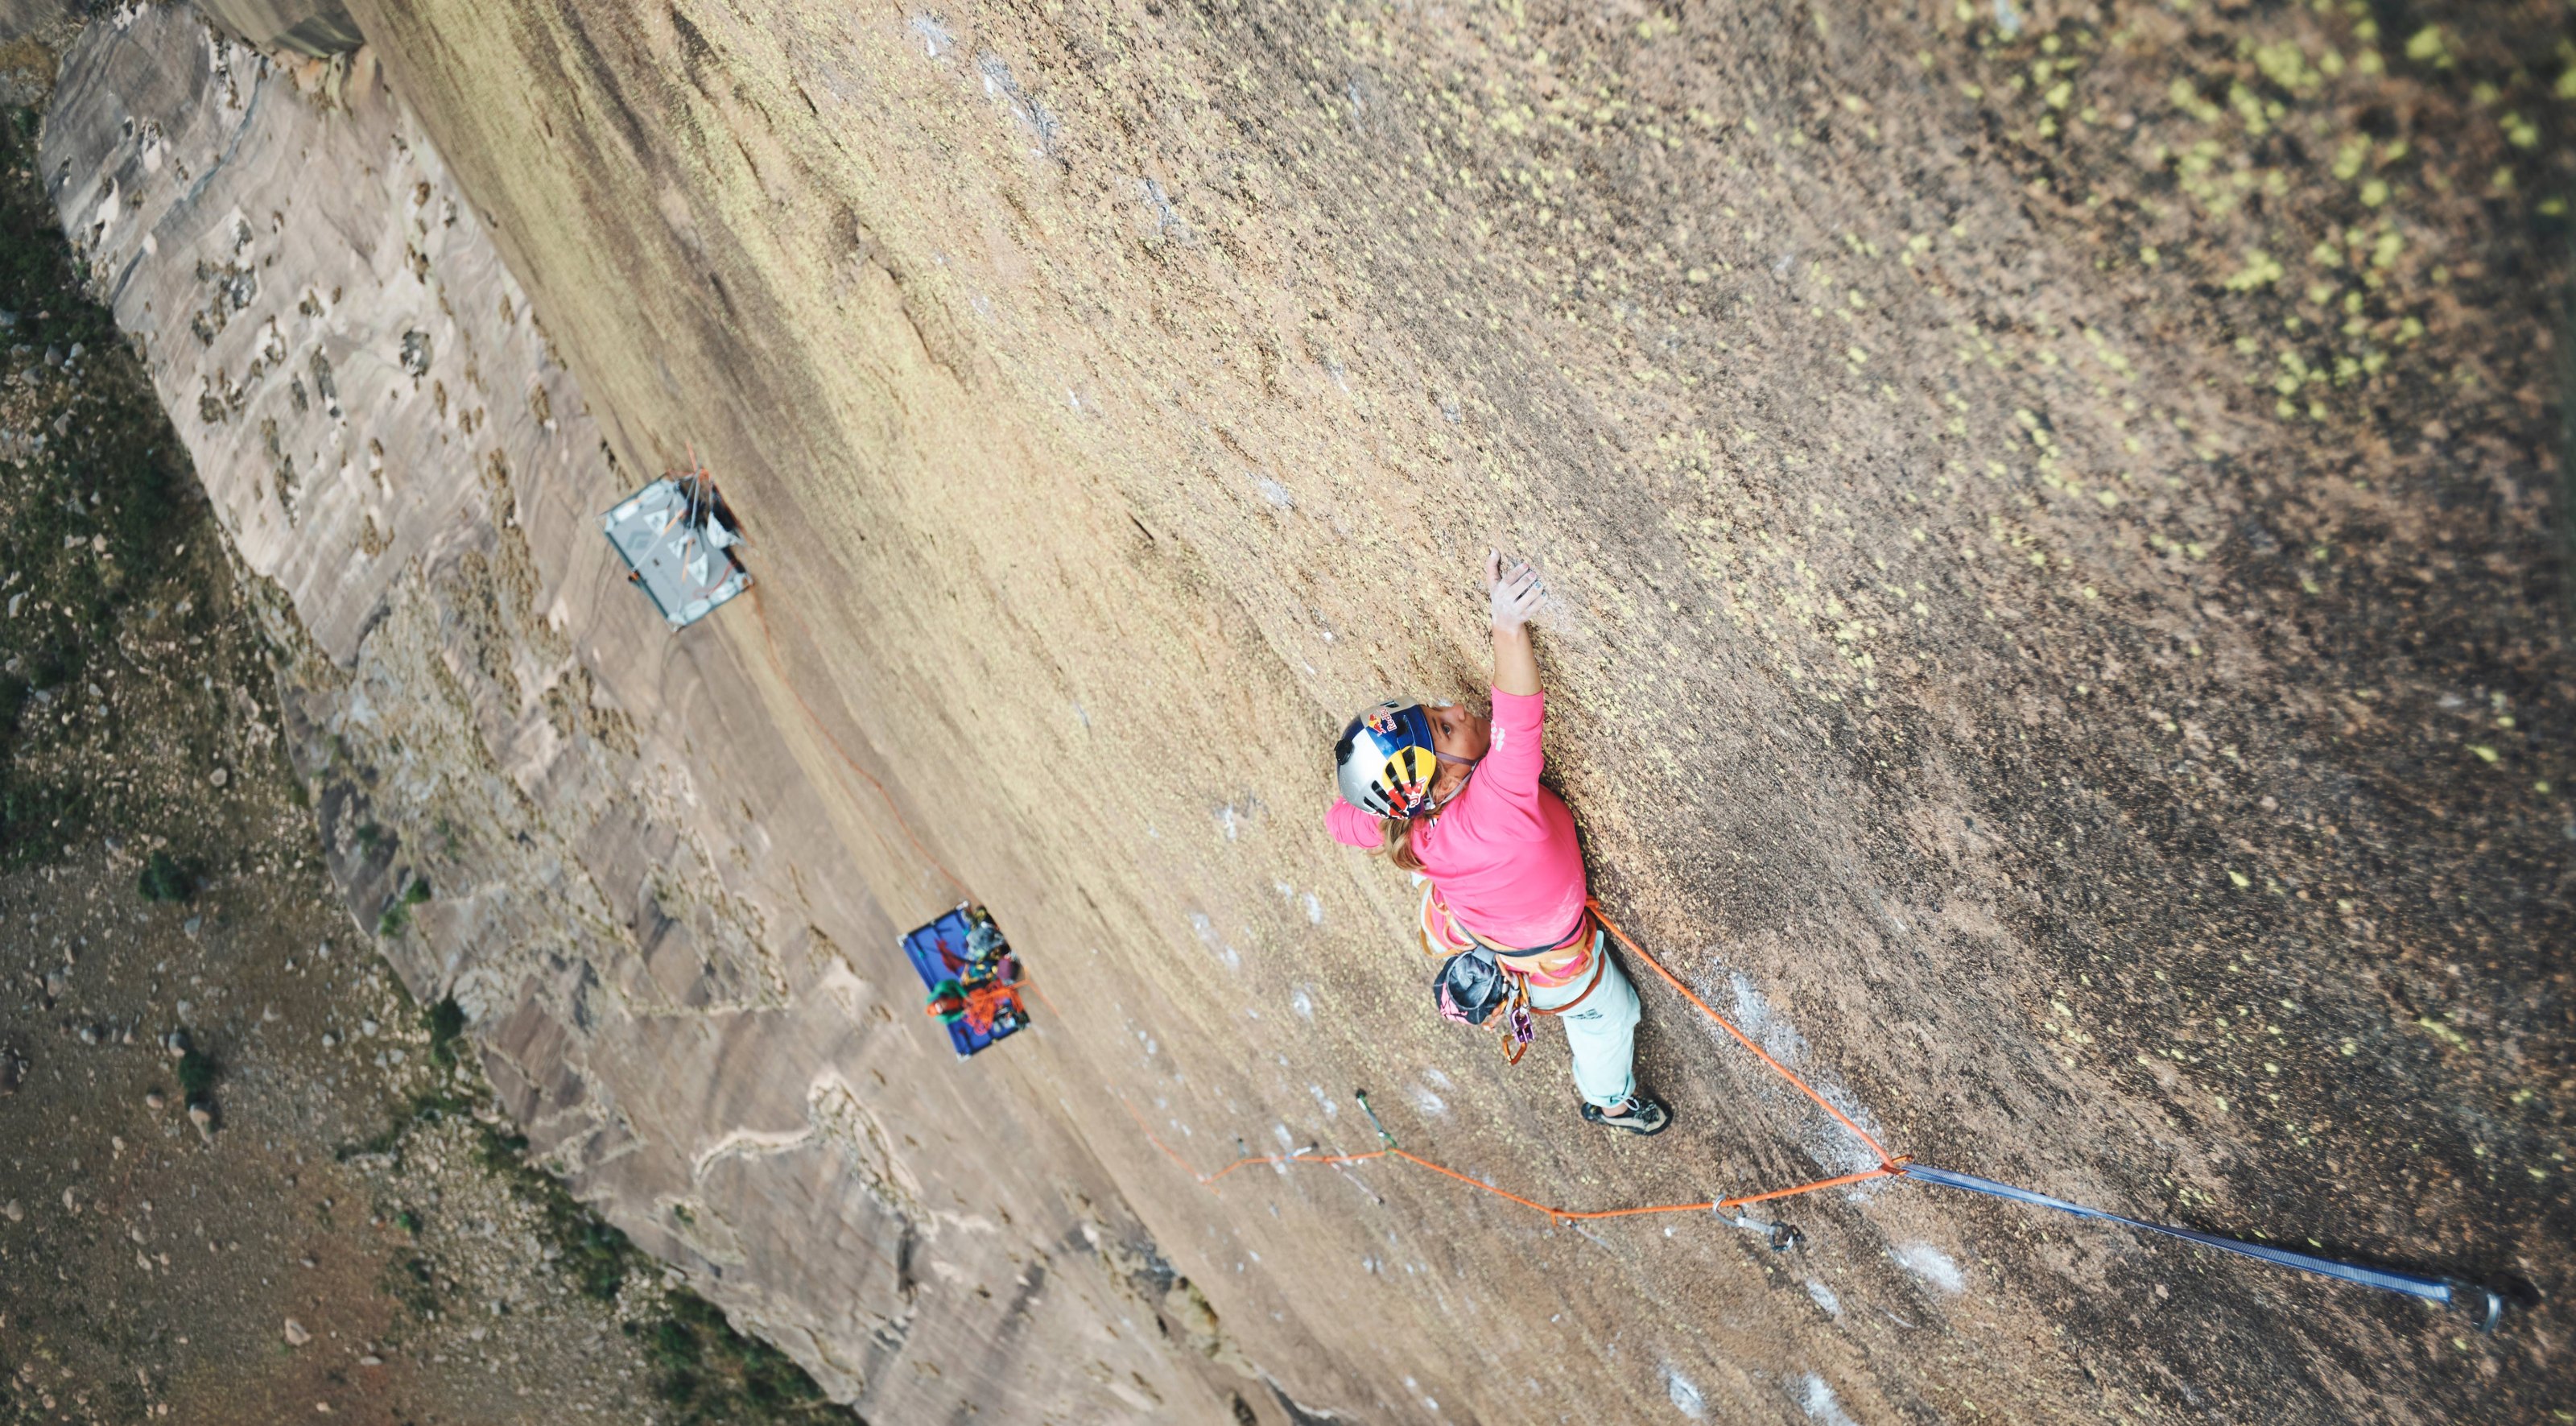 Photos: Heart-stopping Photos From Sasha DiGiulian's Ascent of Mora ...